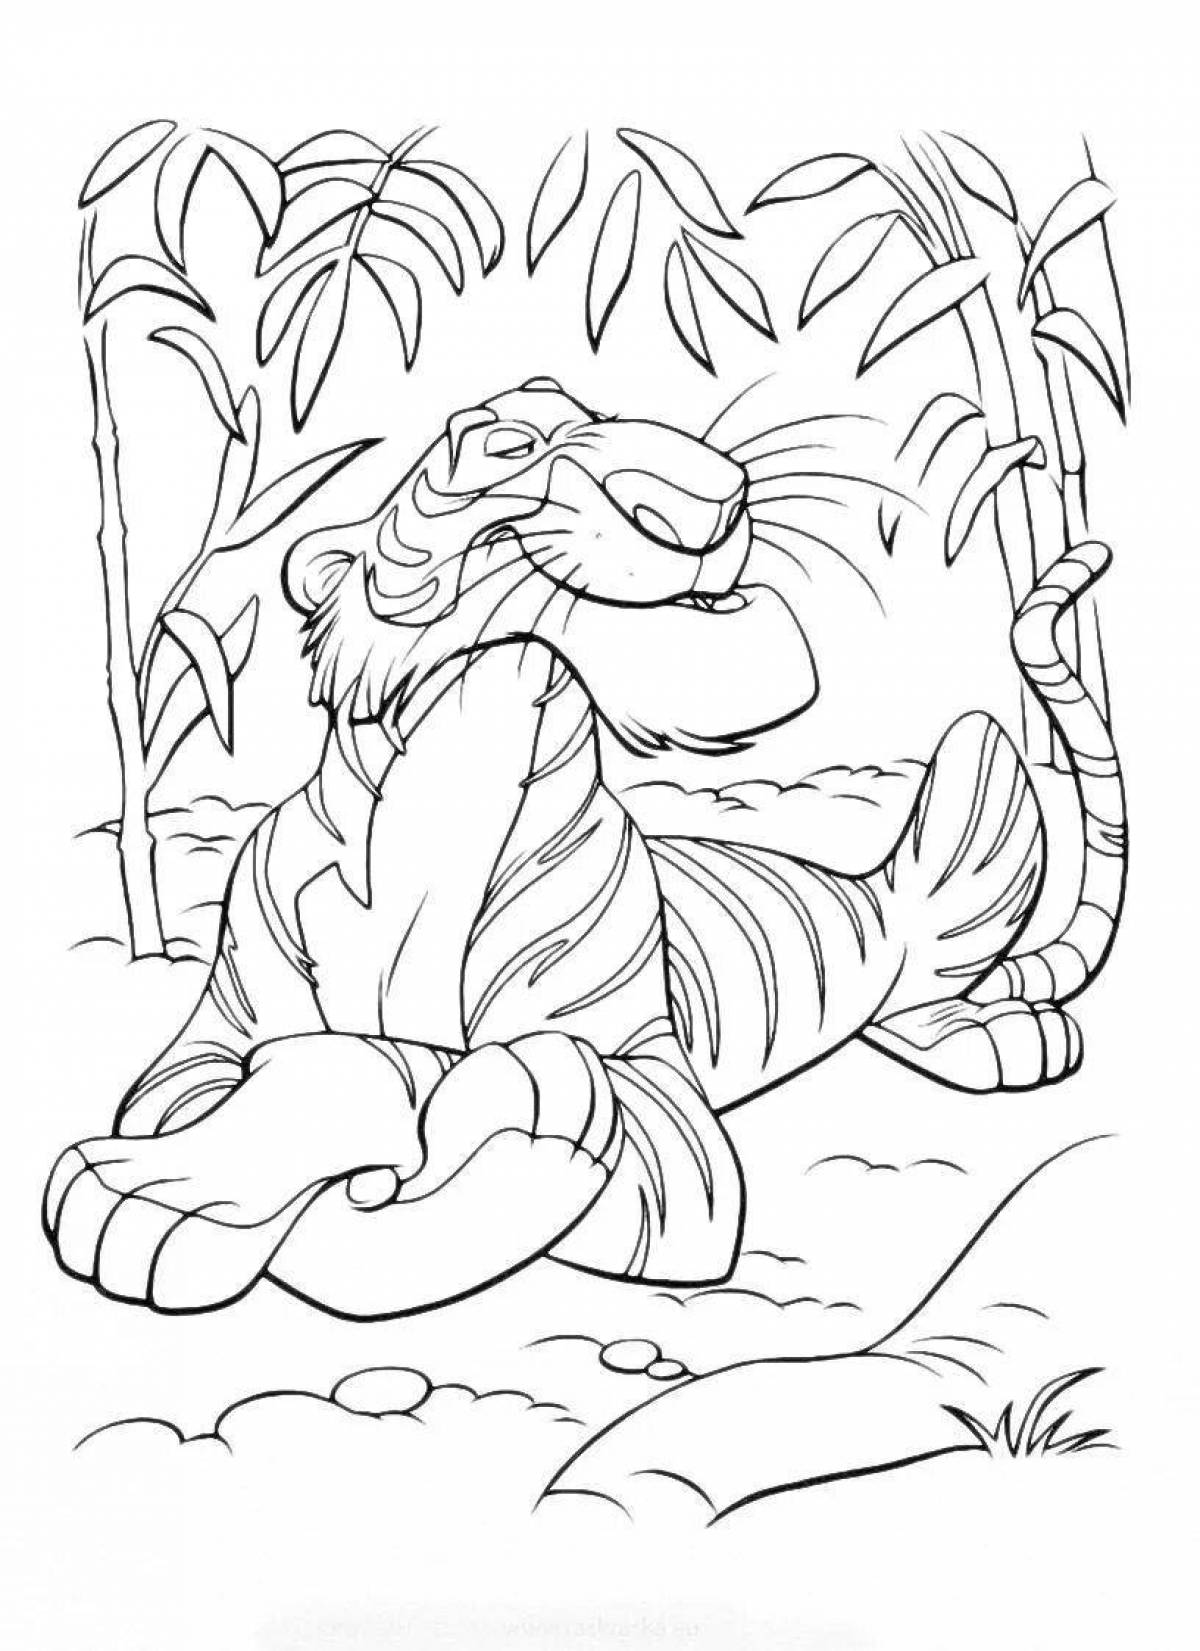 Grand Tiger Sherkhan coloring page